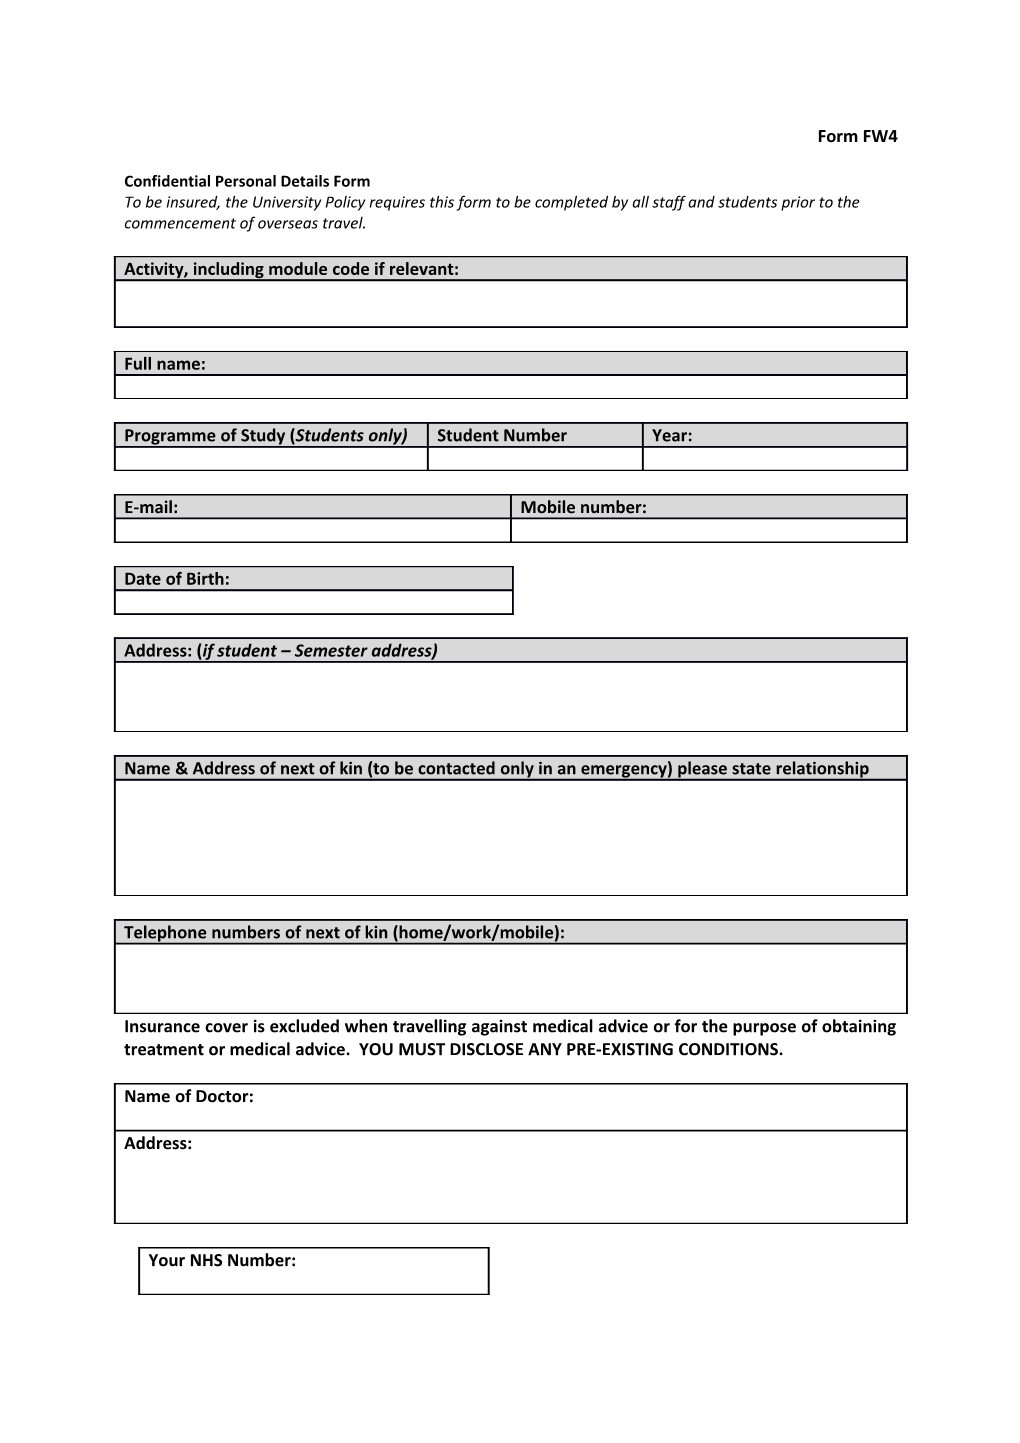 Confidential Personal Details Form